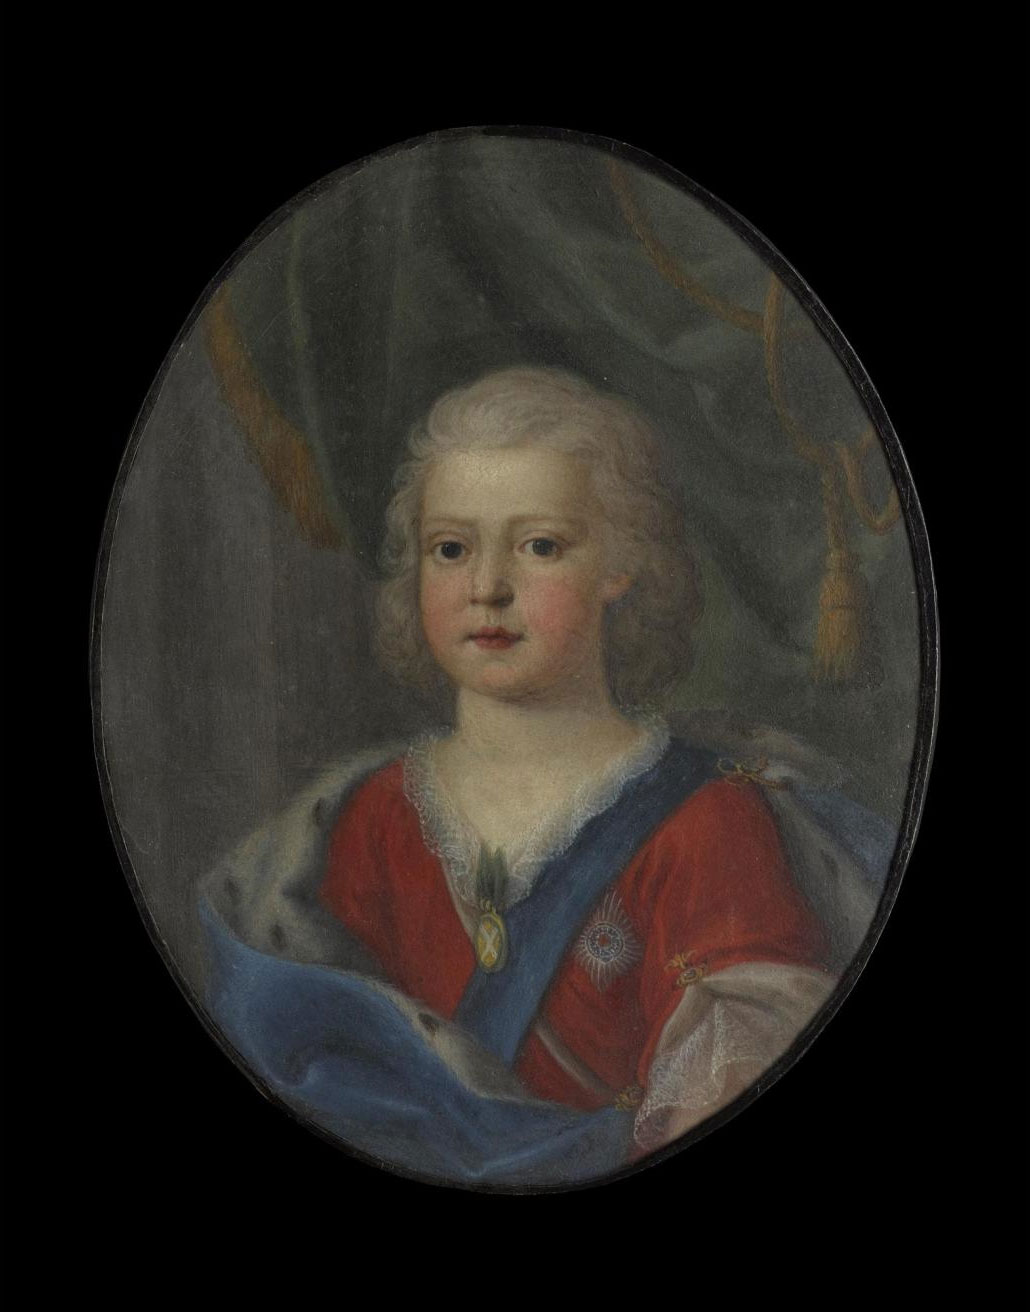 Miniature of Prince Charles Edward Stuart, at around 5 years old.